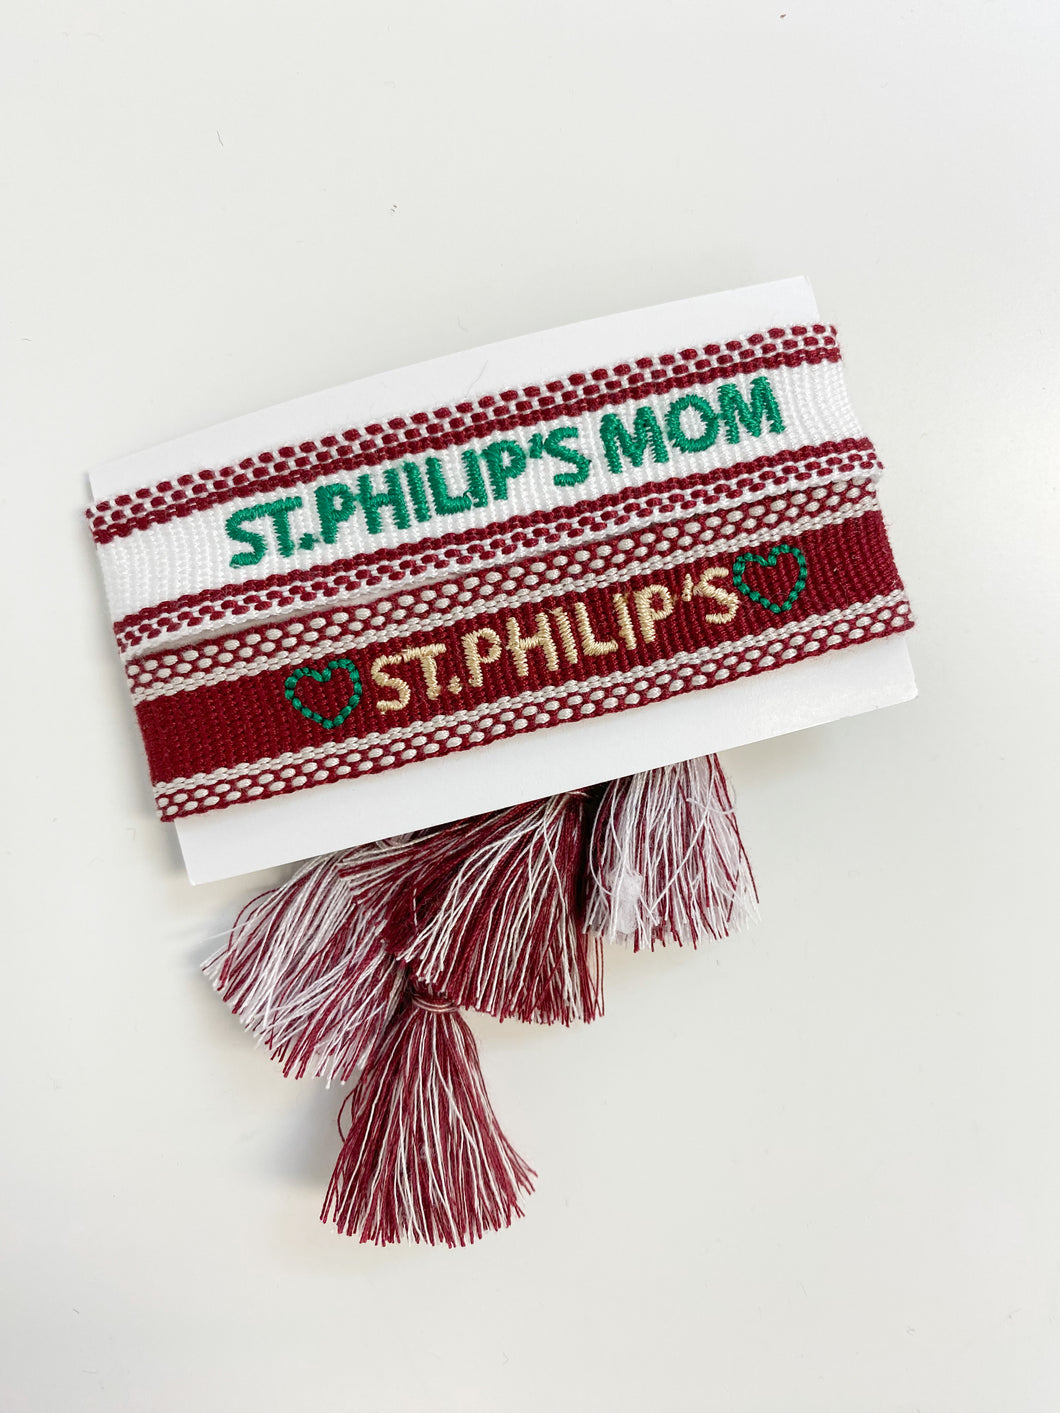 St Philips Mom Bracelet - No Flaws